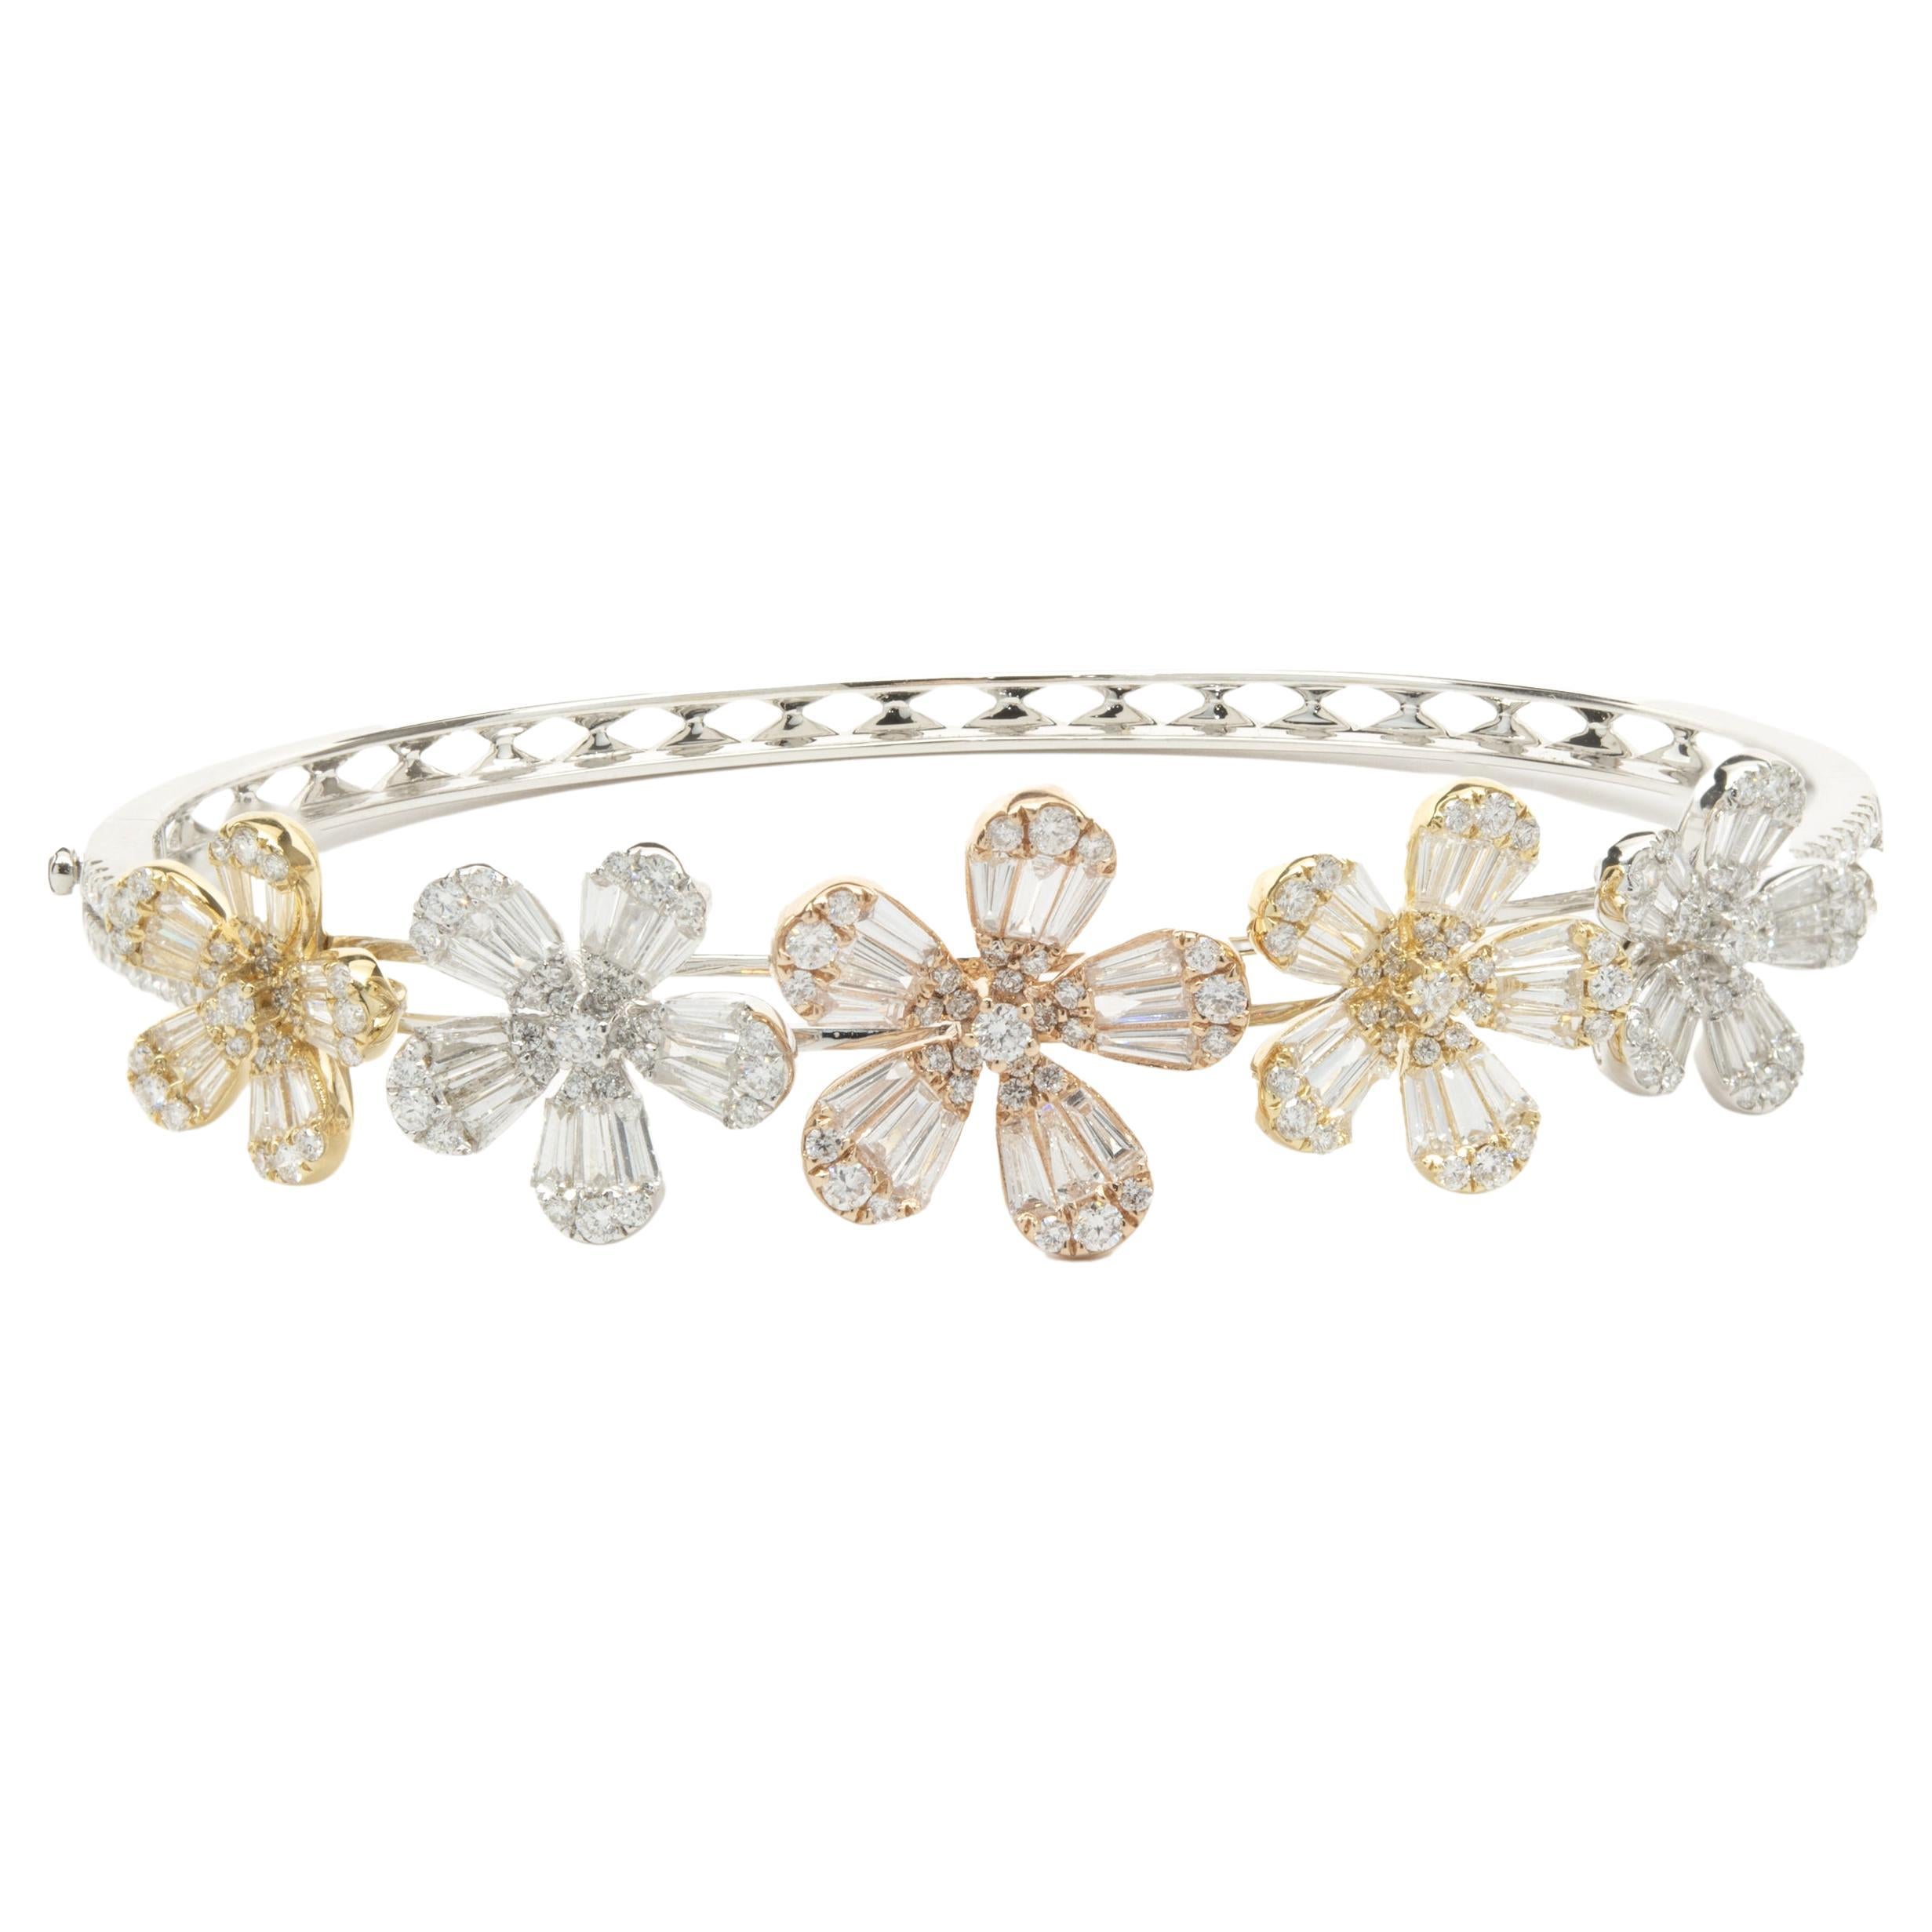 18 Karat White, Rose, and Yellow Gold Mosaic Diamond Flower Bangle Bracelet